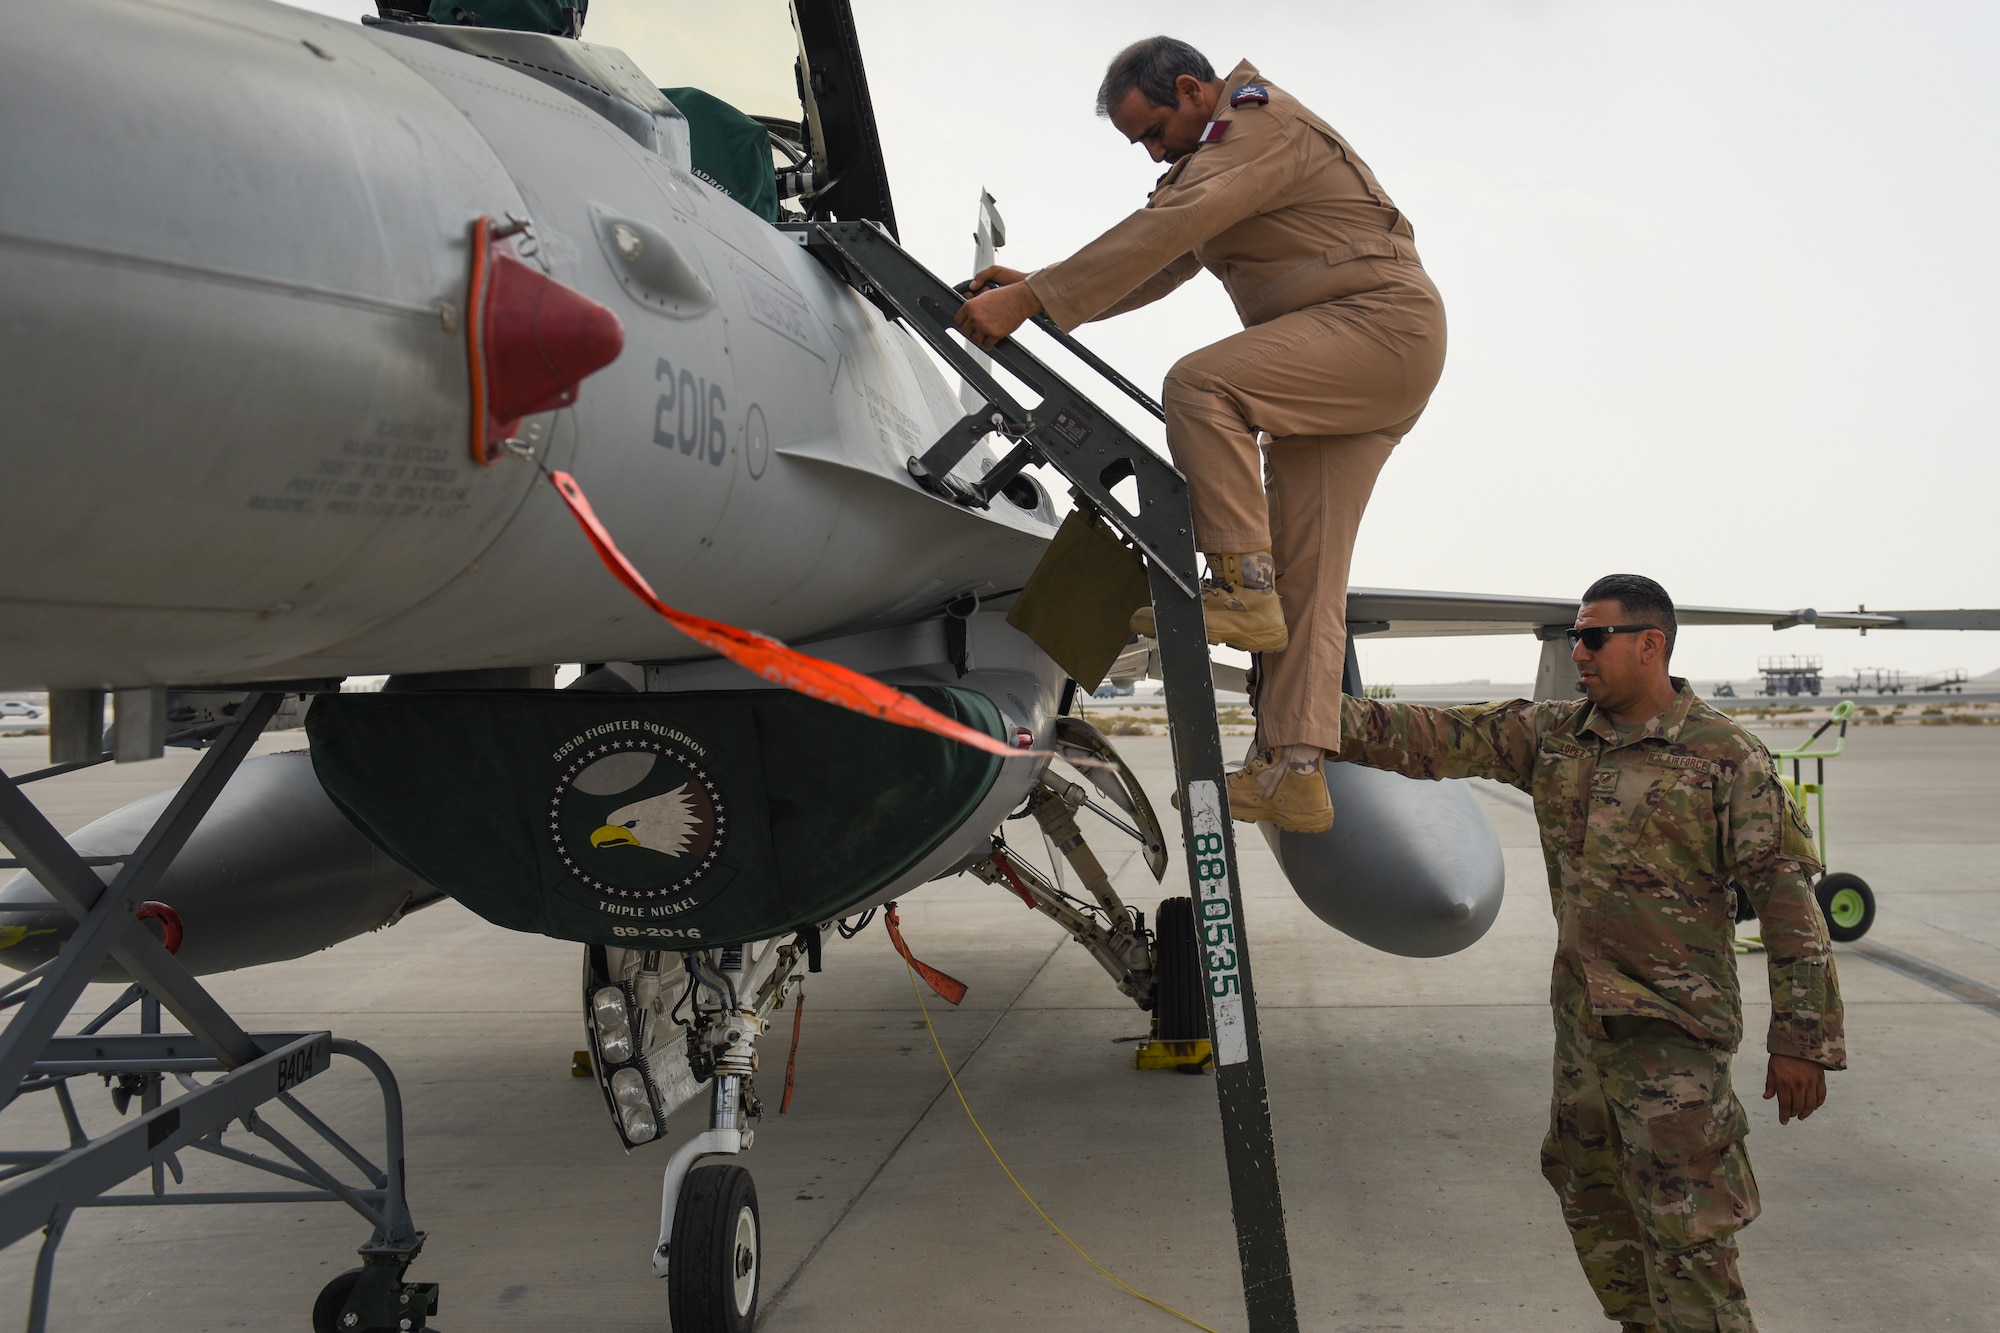 The Commander of the Qatar Emiri Air Force, Staff MG Pilot Salem Bin Hamad Al-Nabet, climbs into a U.S. Air Force F-16 Fighting Falcon during a visit to Al Udeid Air Base Qatar, Nov 10, 2019.